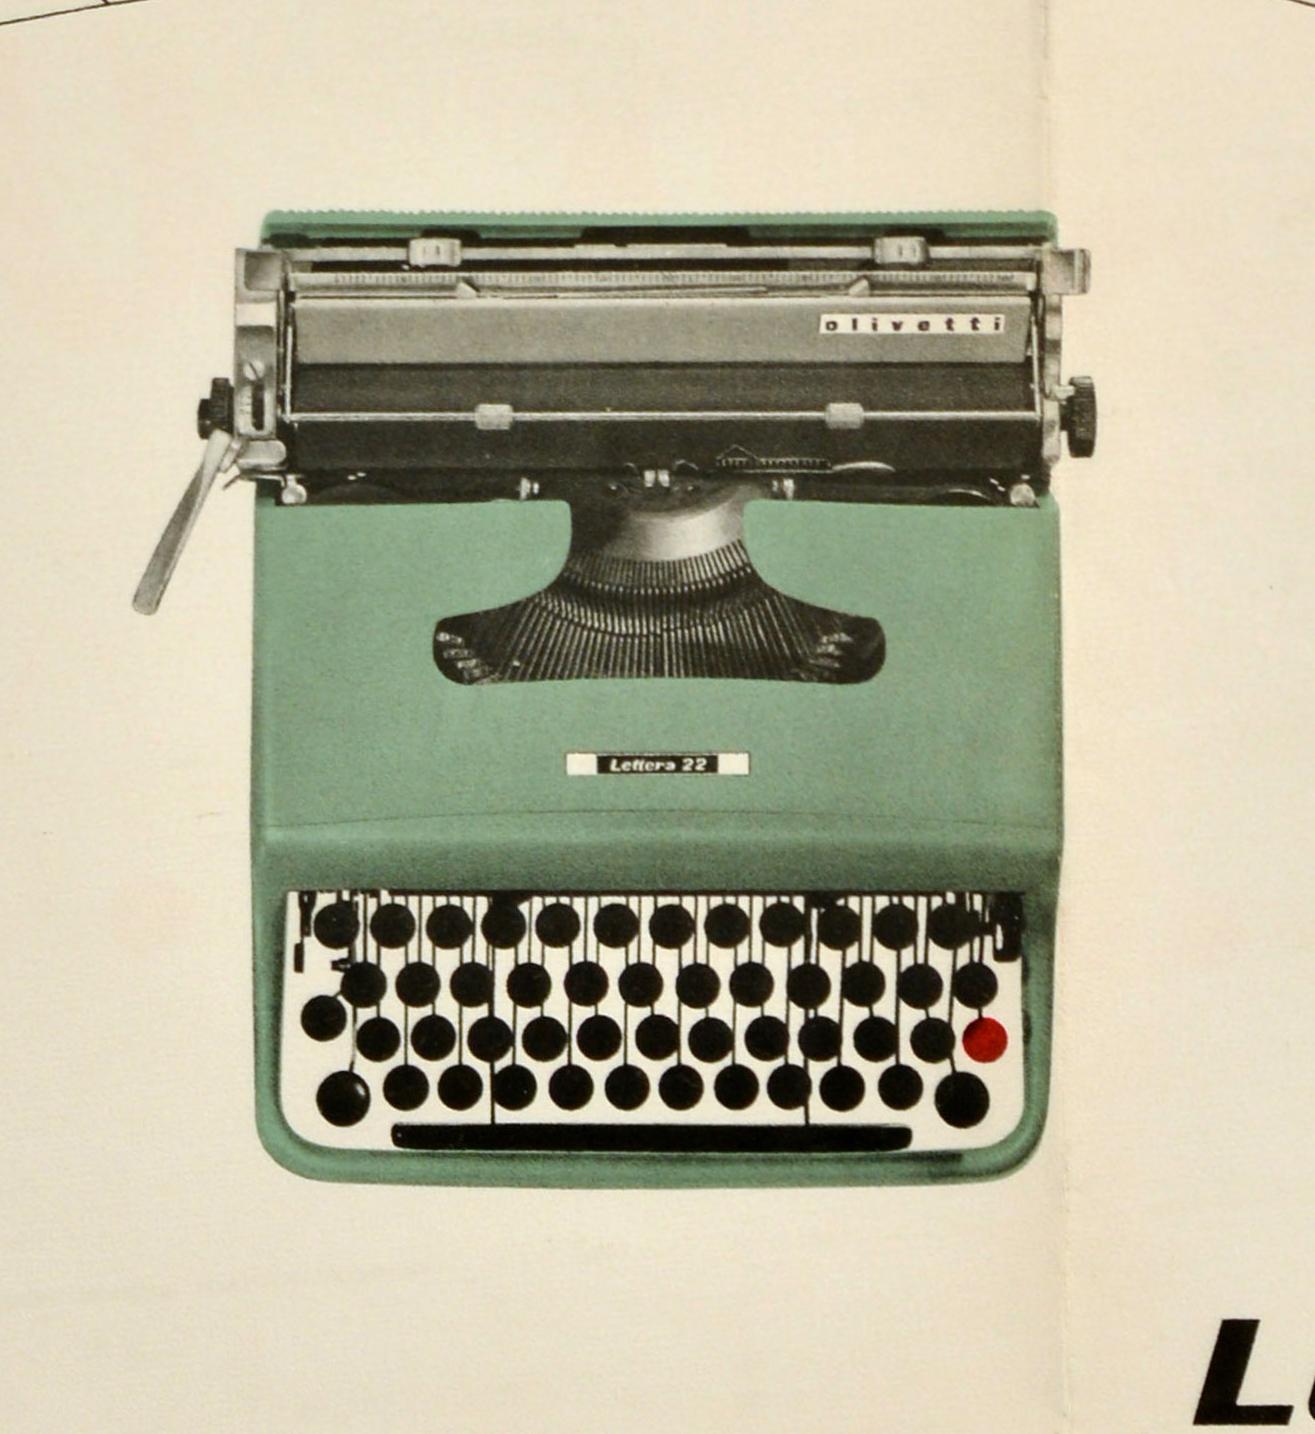 Original Vintage Advertising Poster Olivetti Lettera 22 Typewriter Pintori Italy - Print by Giovanni Pintori